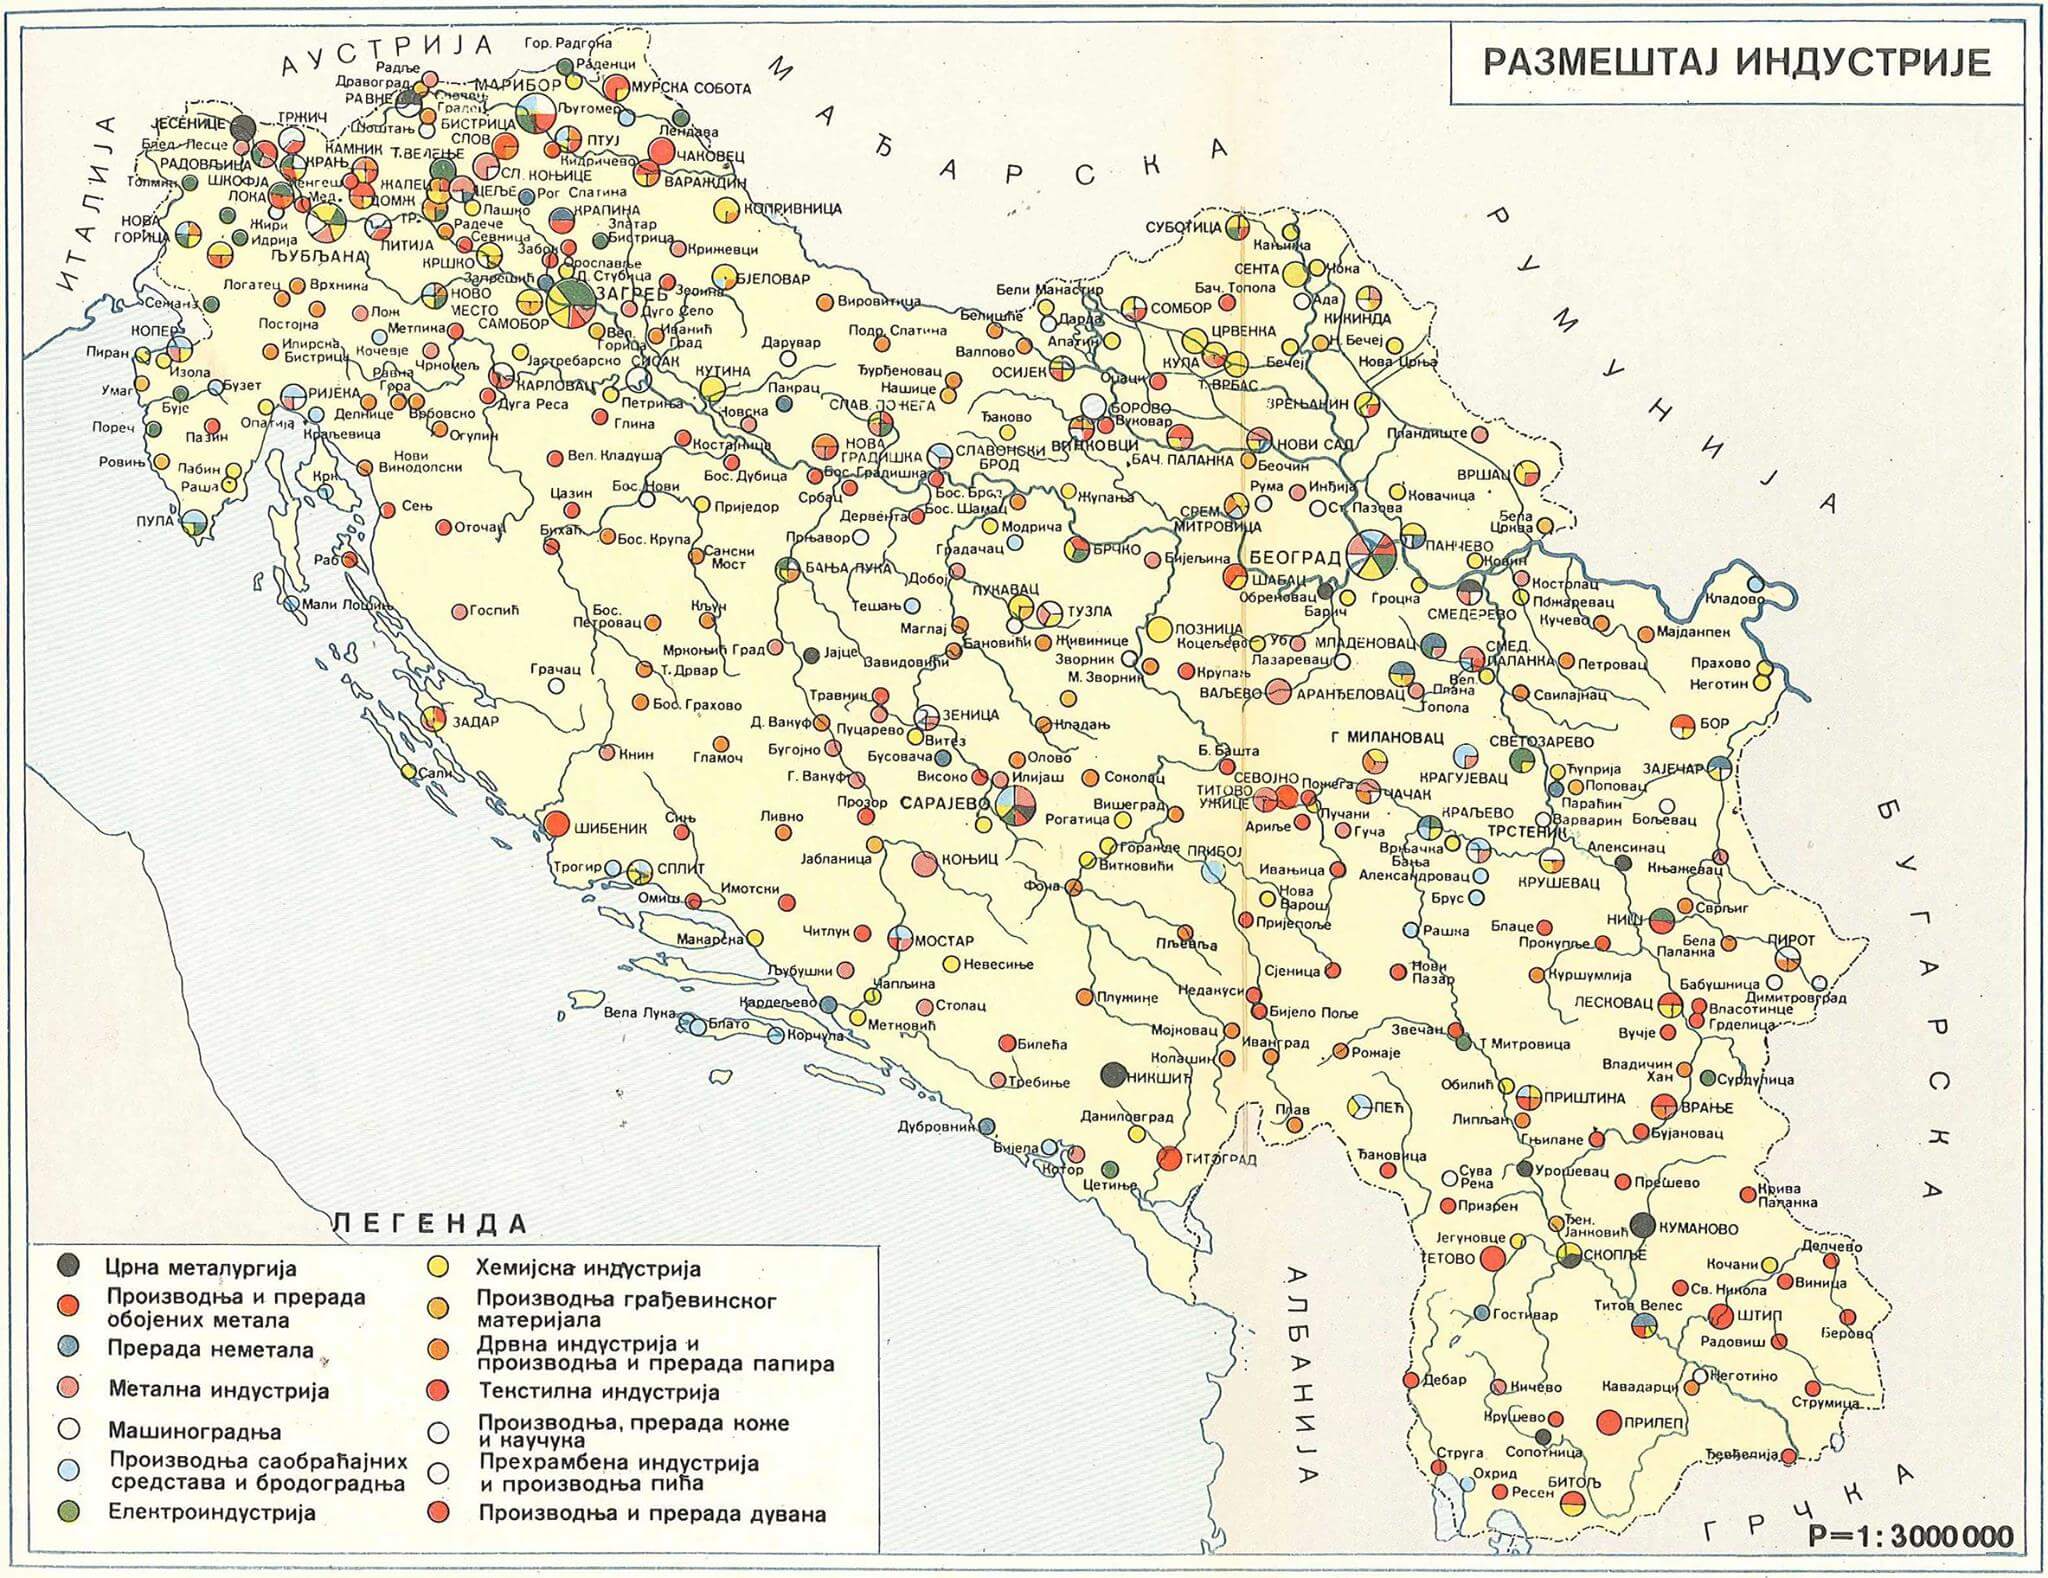 Industrial Distribution in the Socialist Federal Republic of Yugoslavia.